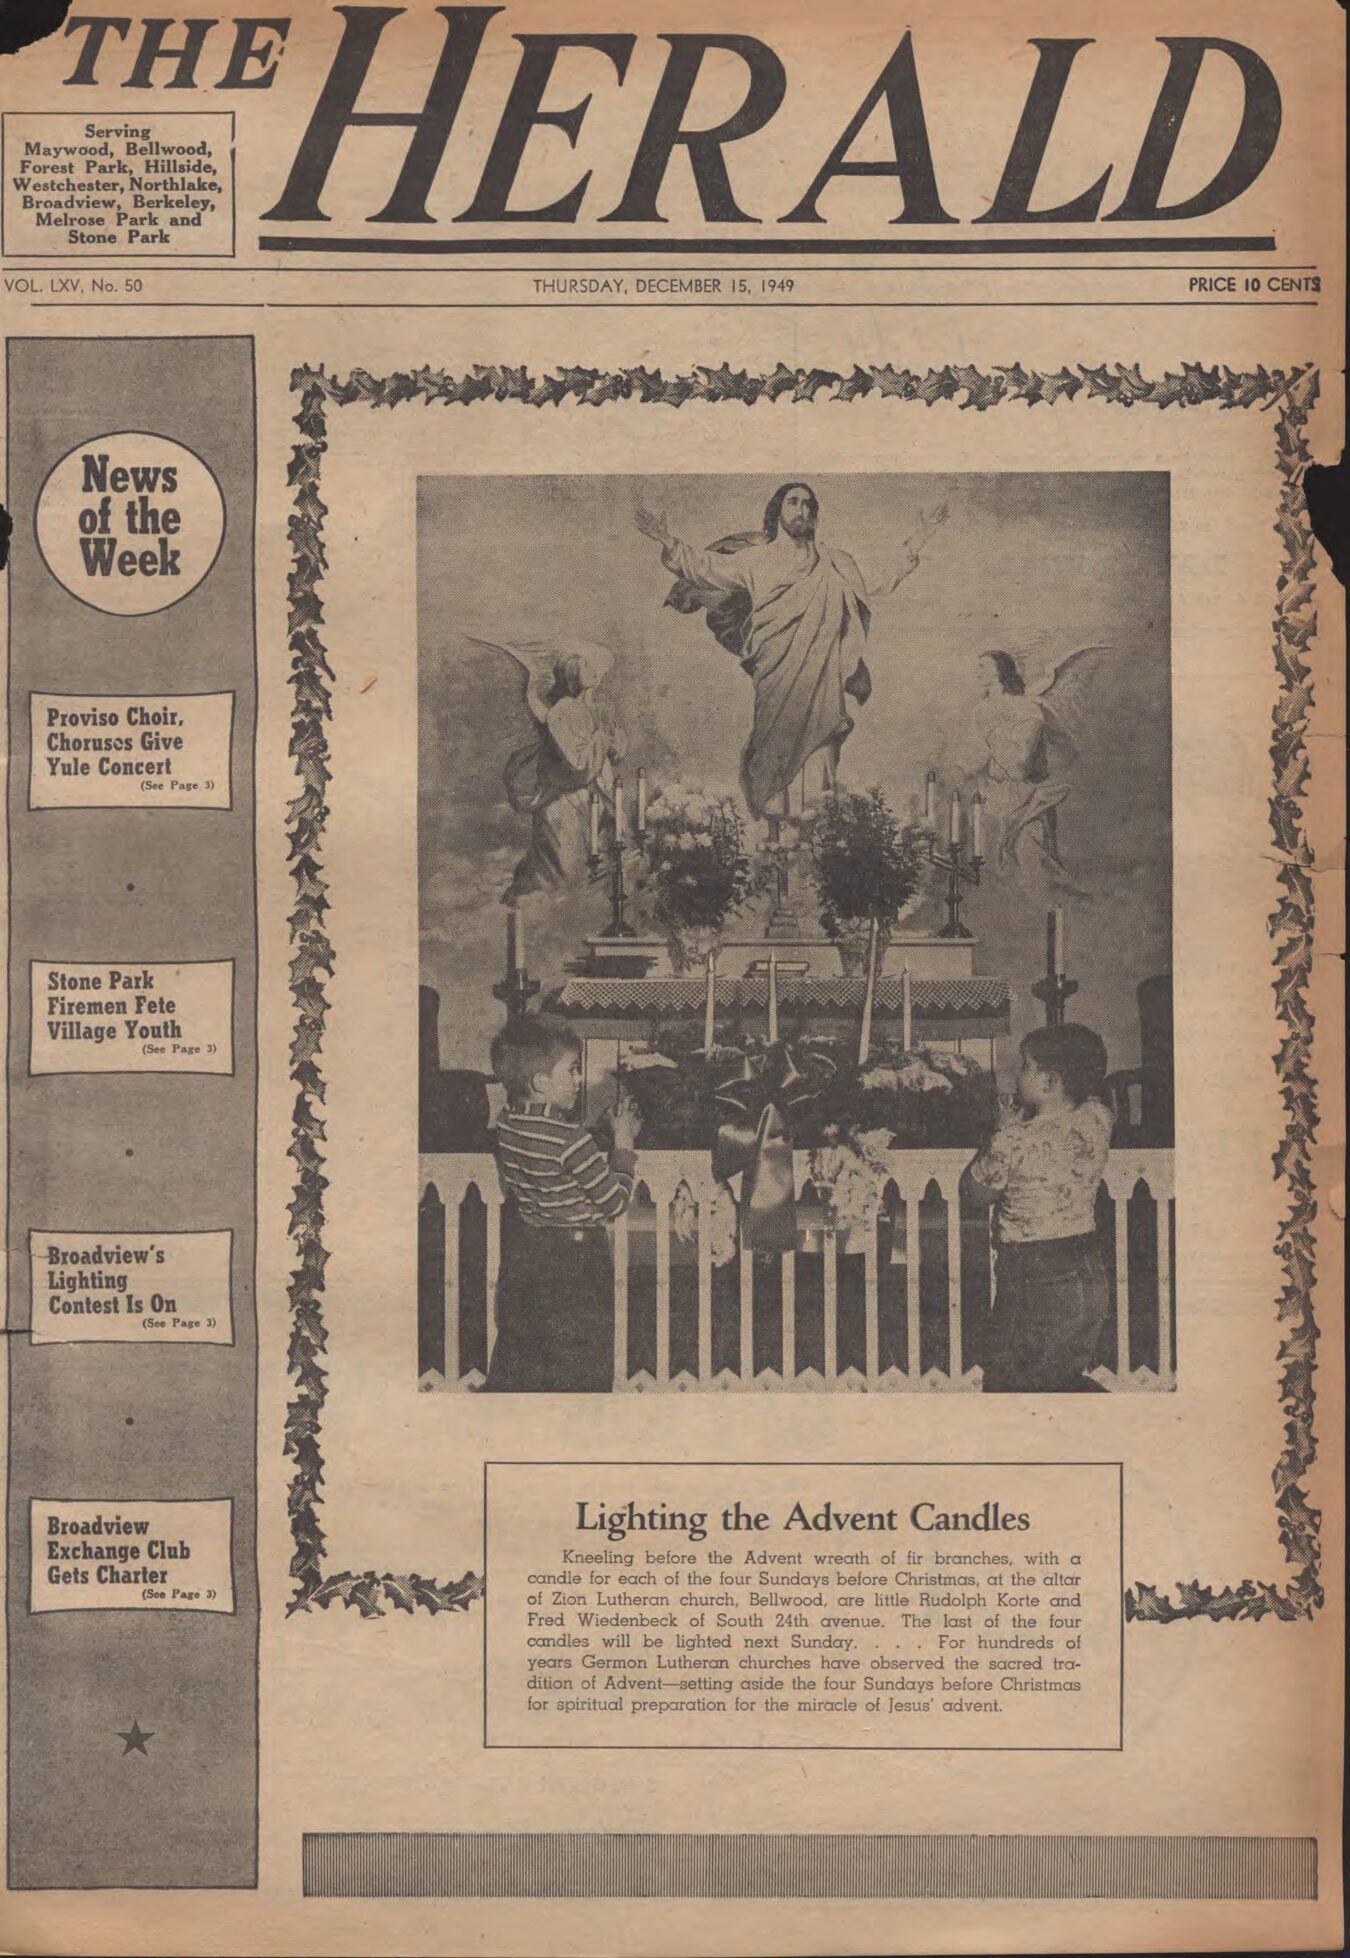 The Herald – 19491215